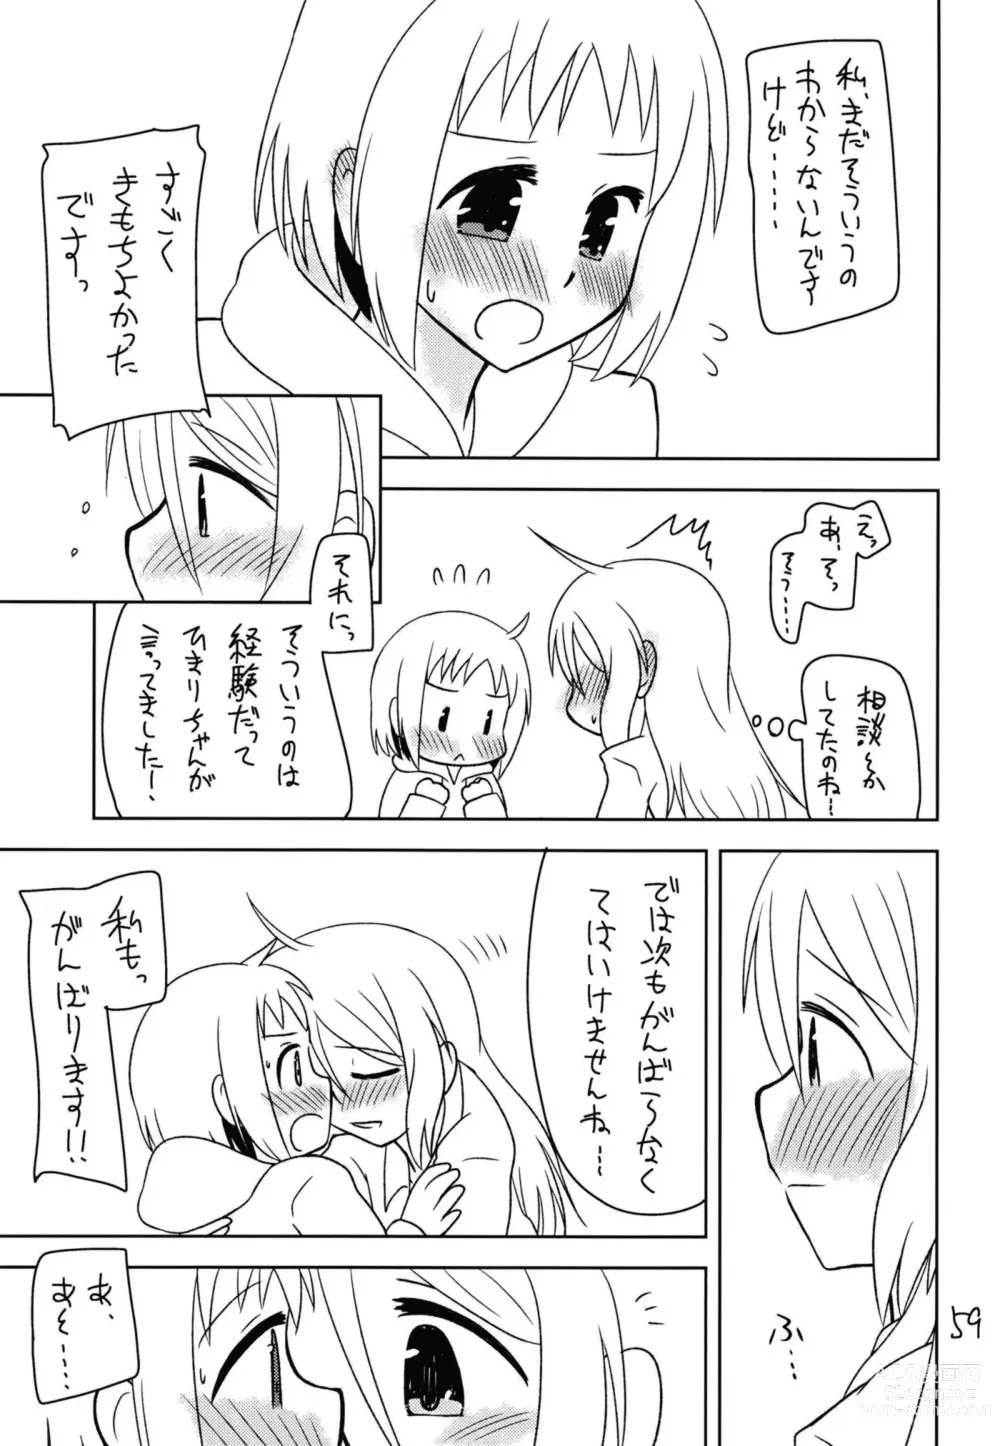 Page 61 of doujinshi Secret Night